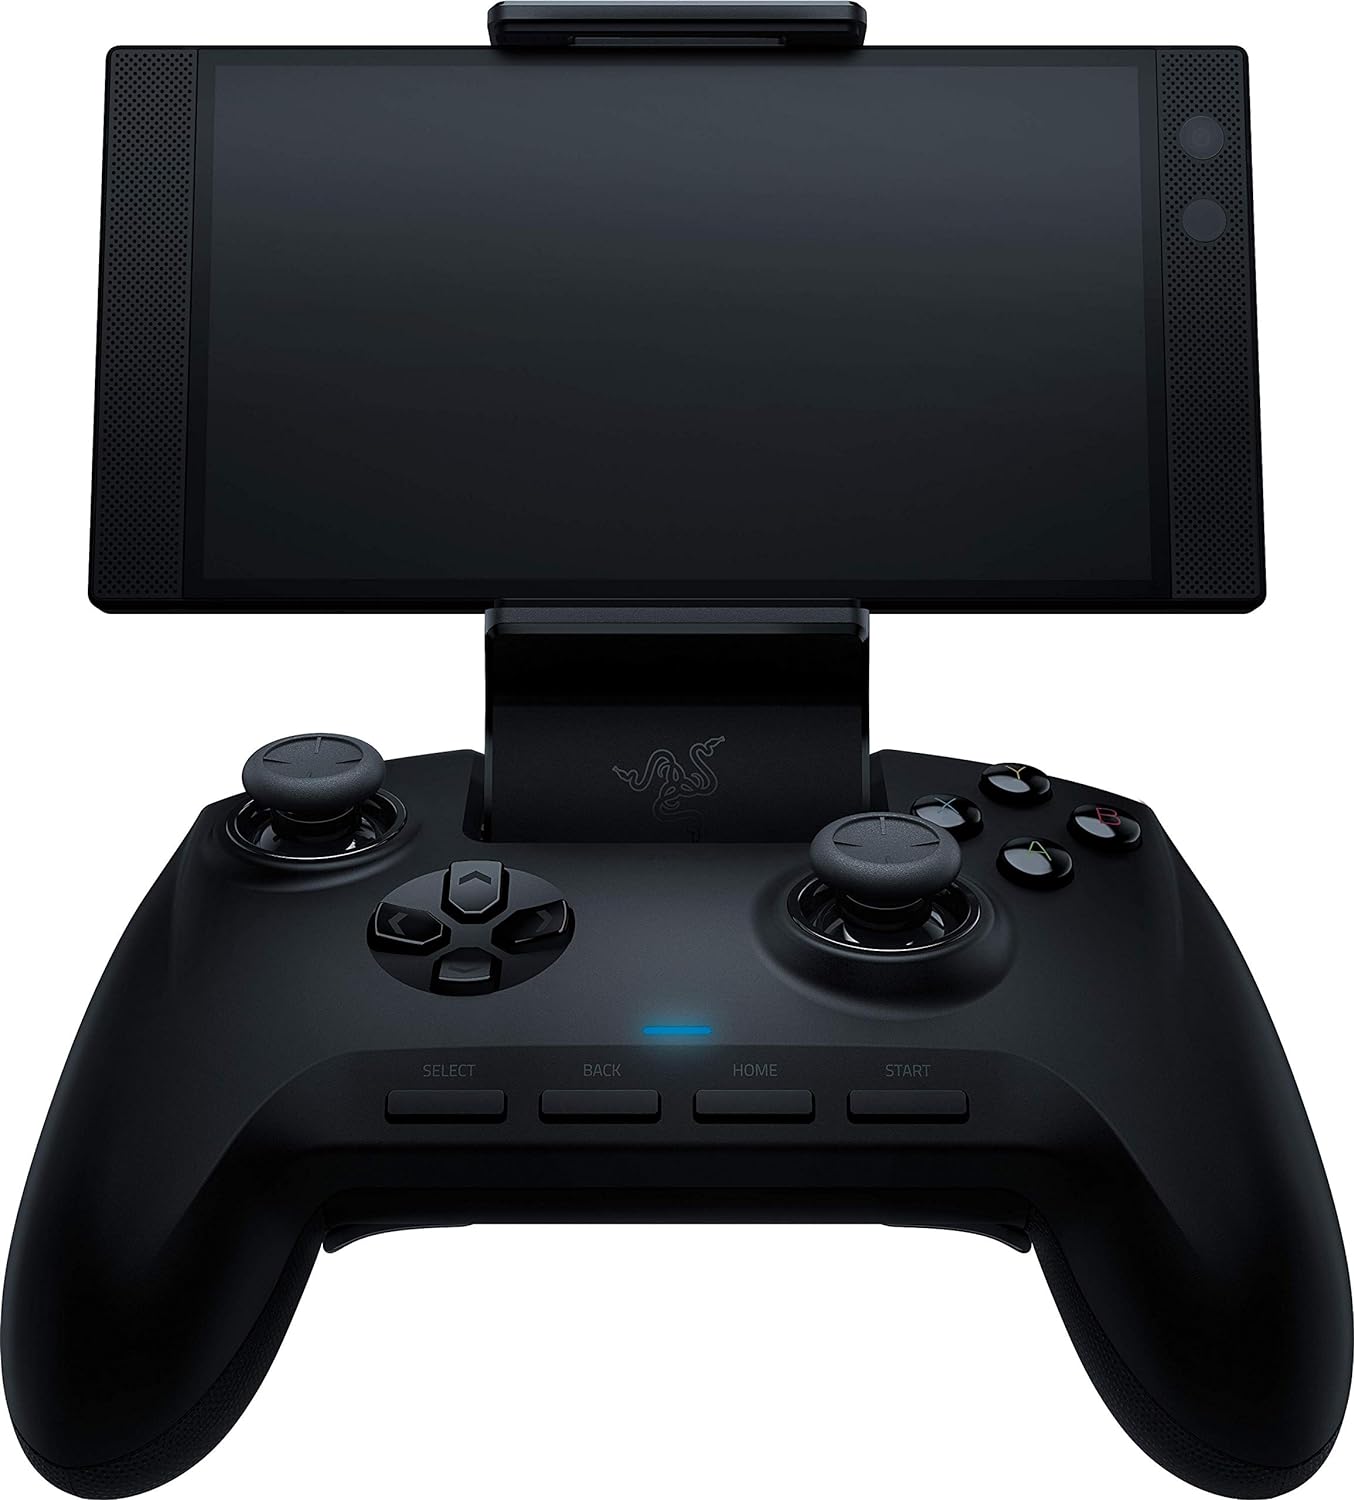 Razer Raiju - Next-Gen Premium Gaming Controller for PlayStation 4 - Fully-Programmable Hyper-Responsive Buttons, Blue